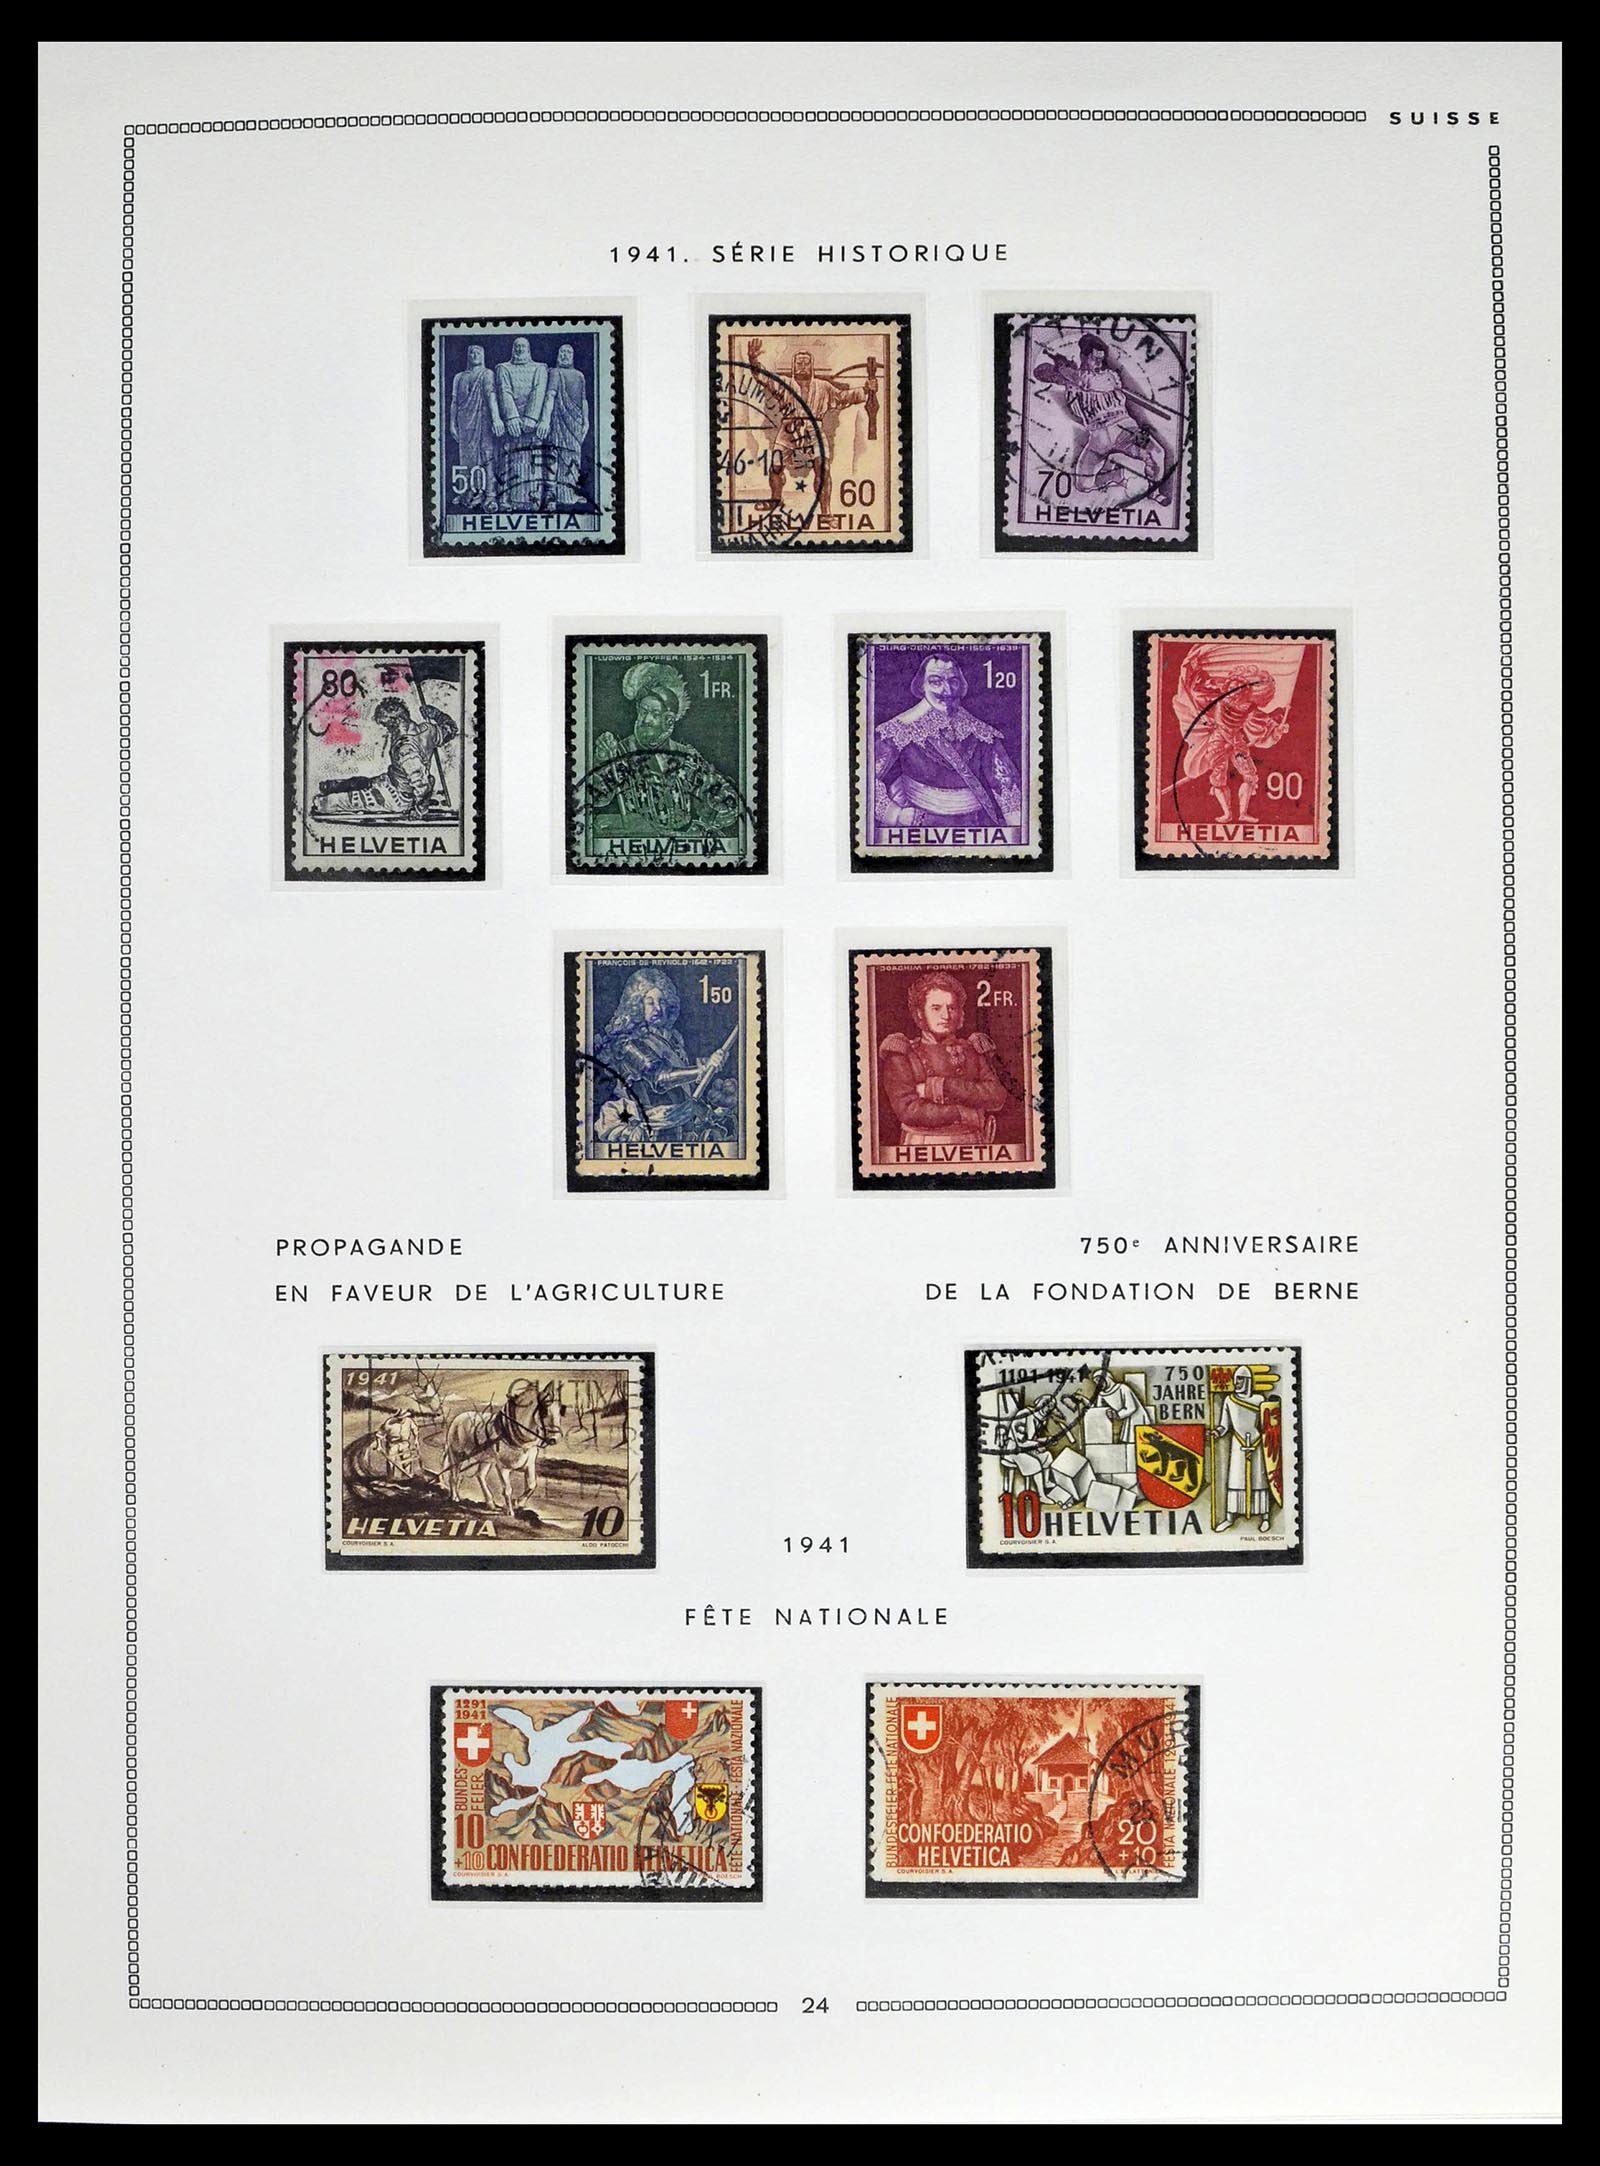 39094 0023 - Stamp collection 39094 Switzerland 1850-2005.